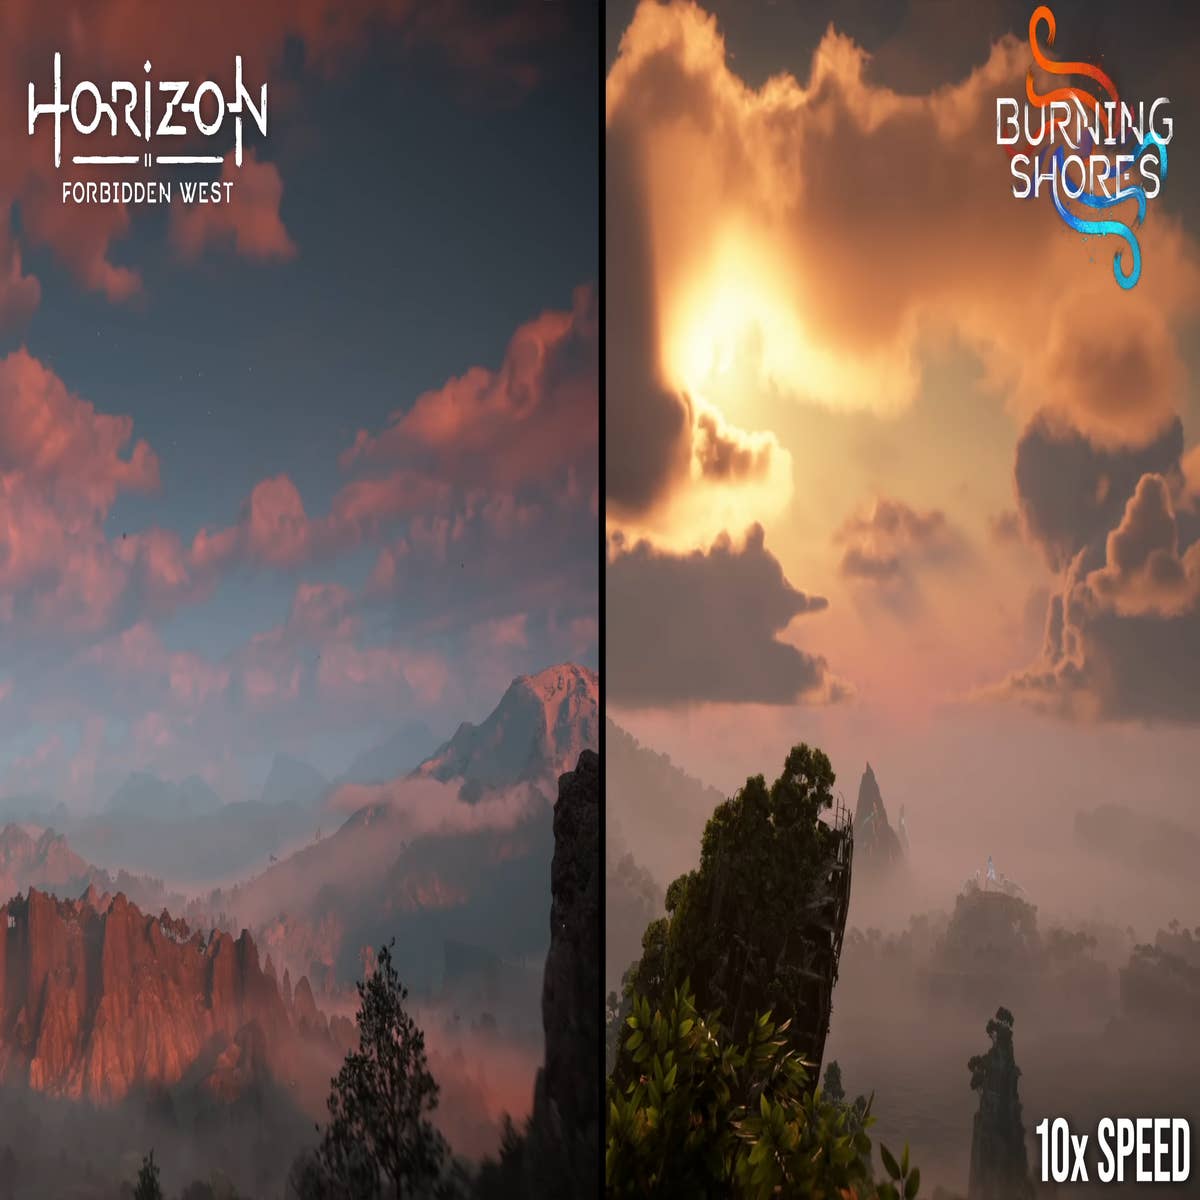 Horizon Forbidden West: Burning Shores' Review